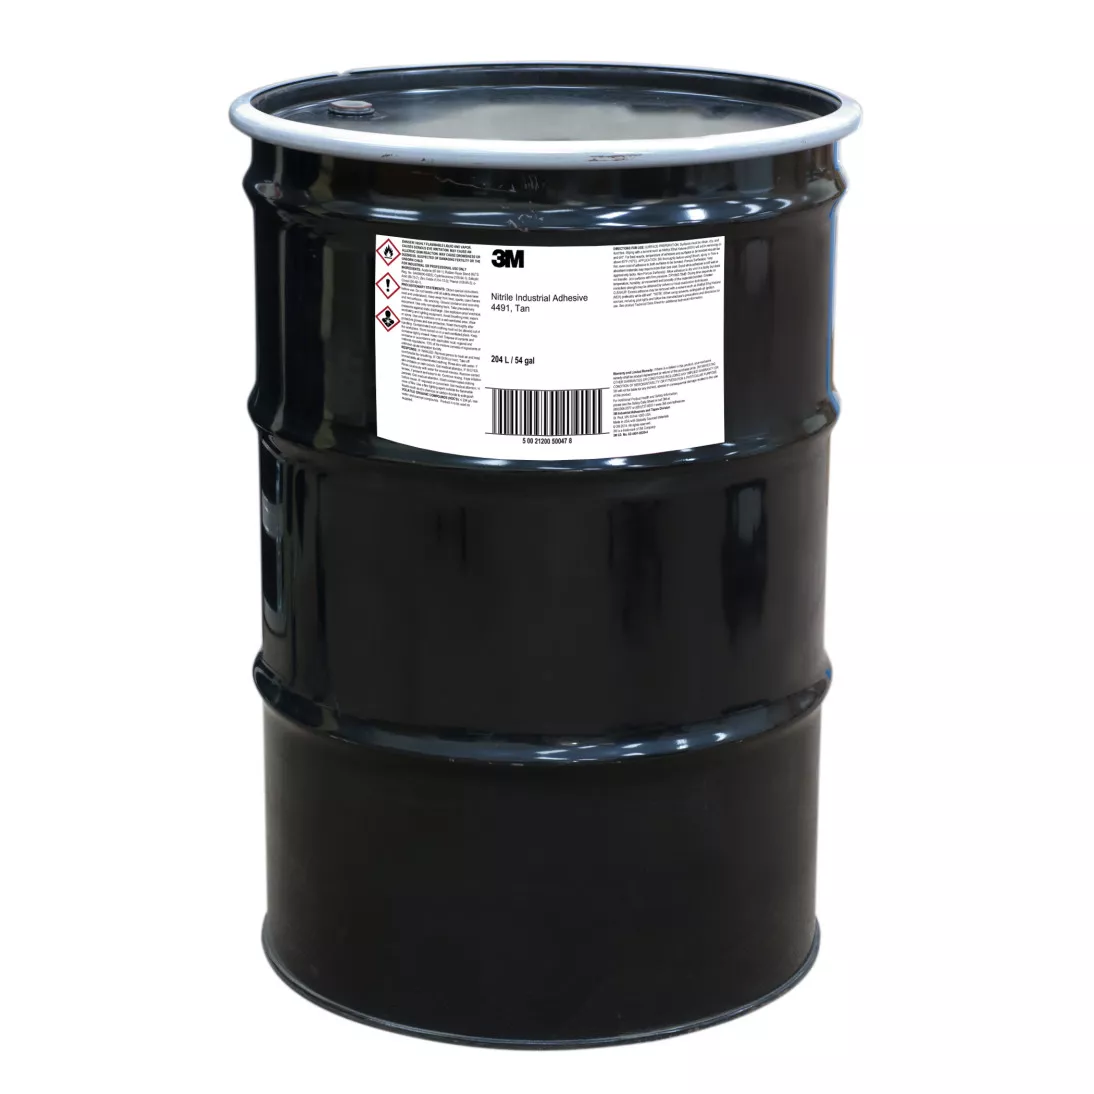 3M™ Nitrile Industrial Adhesive 4491, Tan, 55 Gallon Agitator Drum (54
Gallon Net)